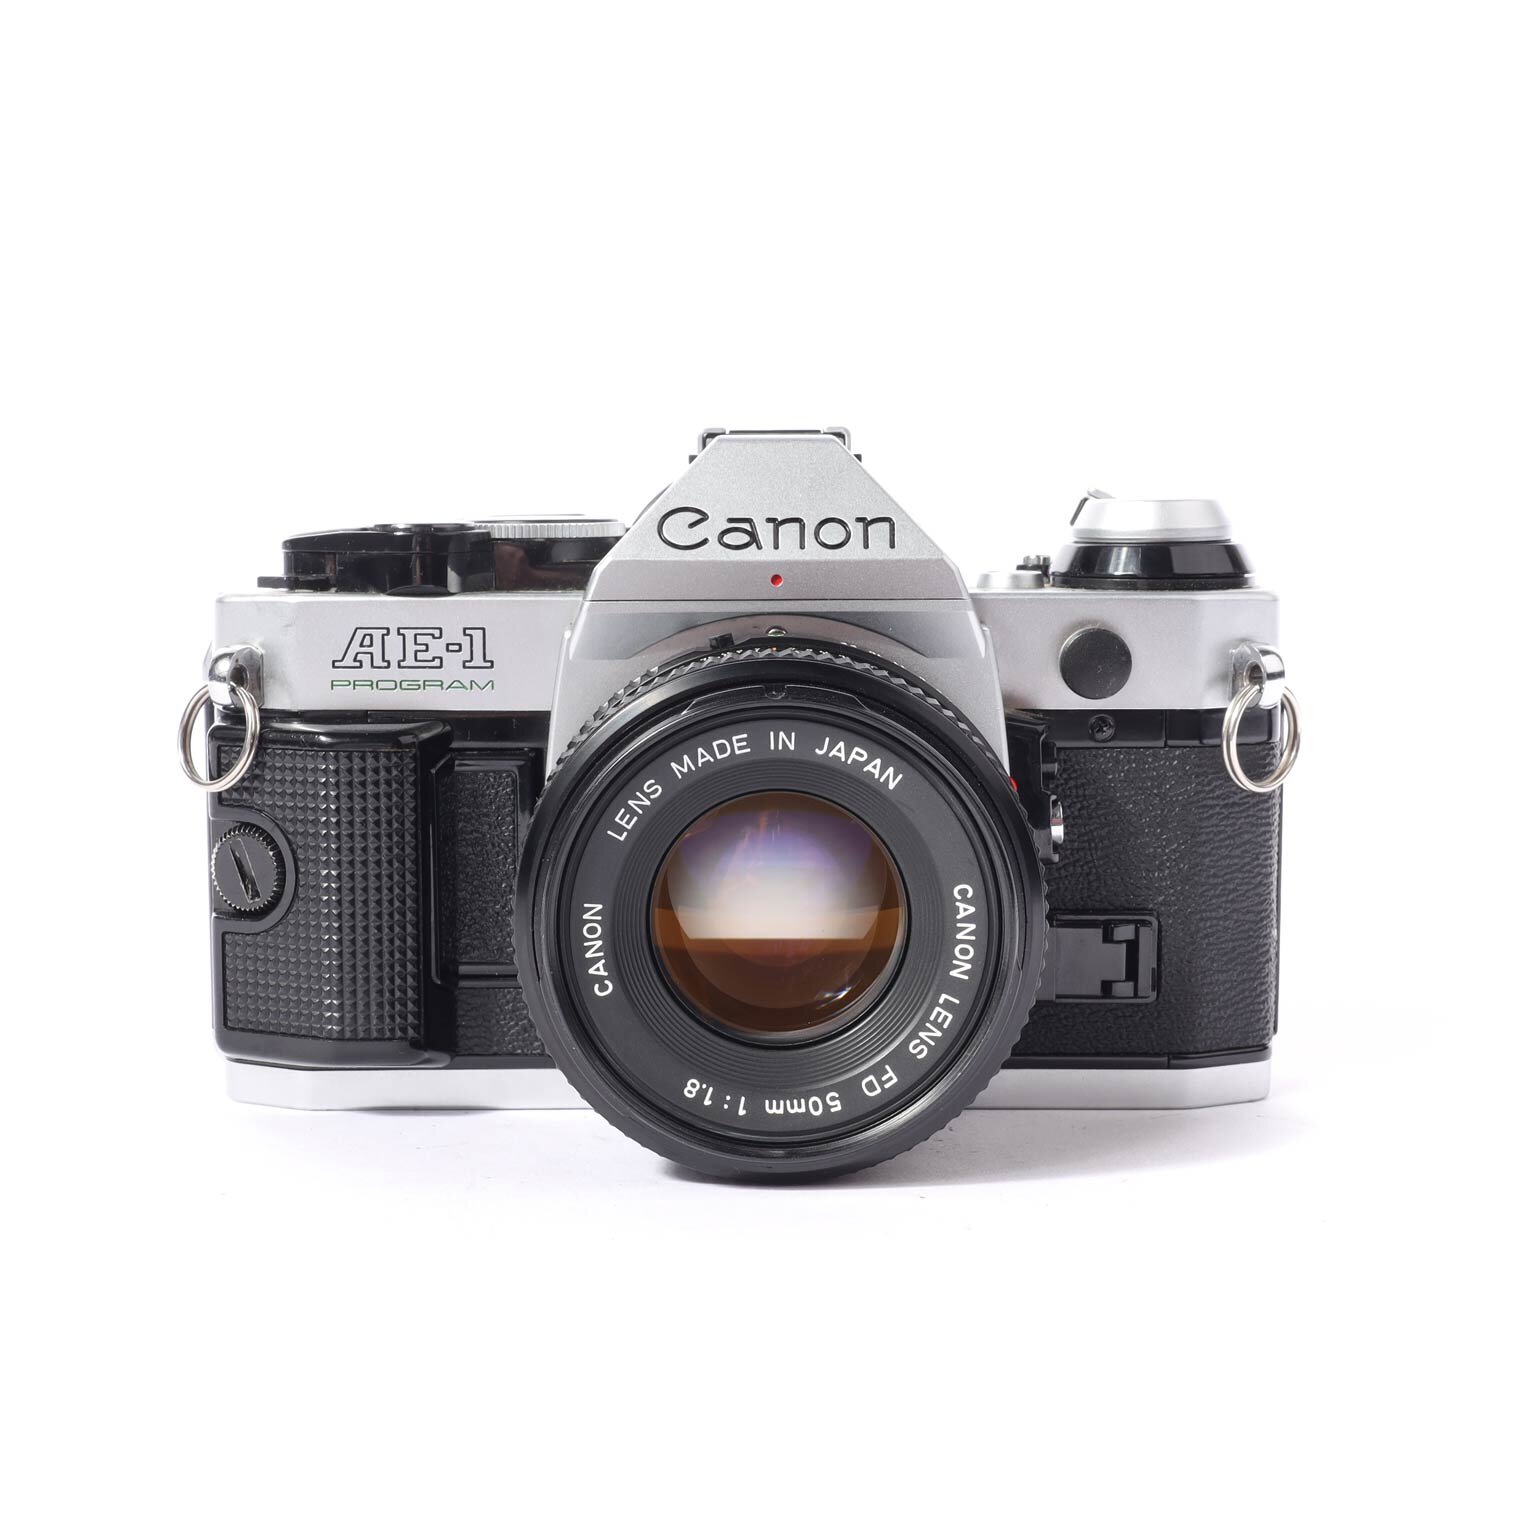 Canon AE-1 program Canon 1,8/50